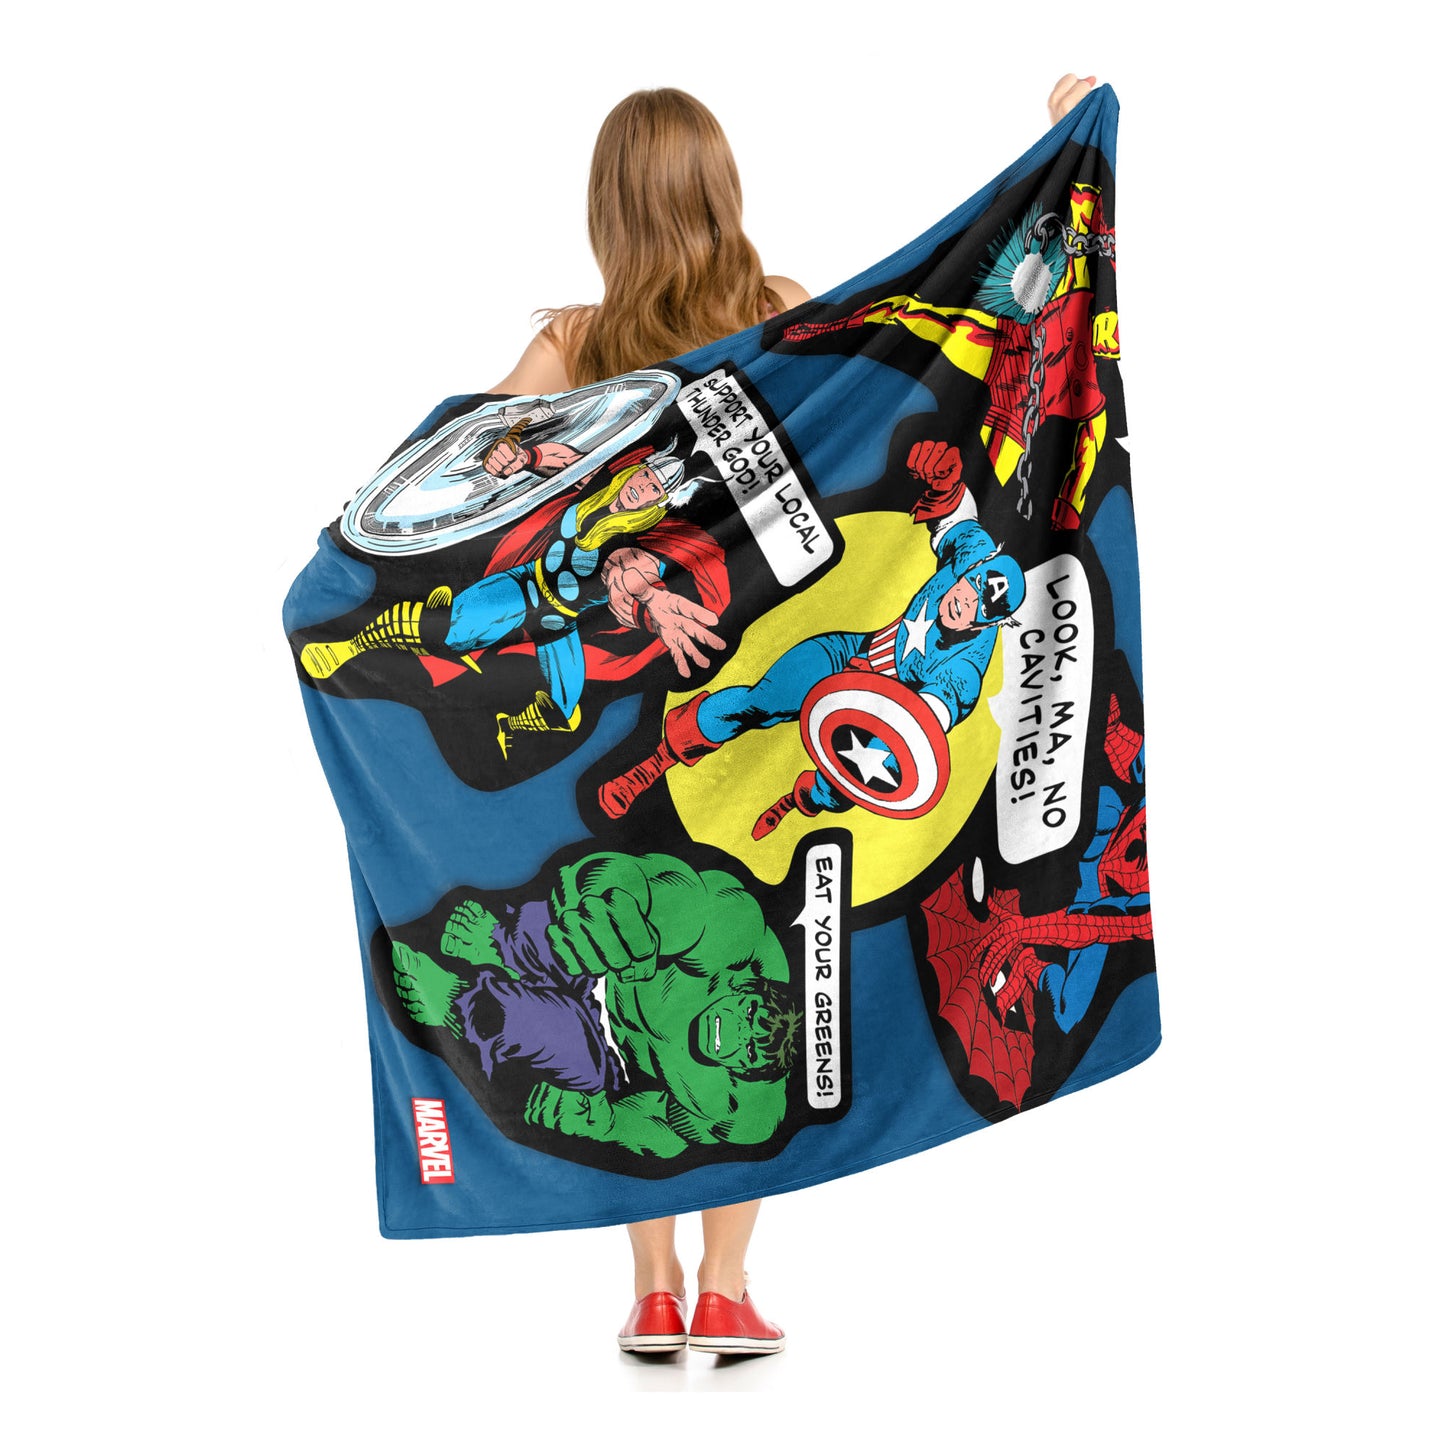 Marvel Comics "Avengers Stickers" Throw Blanket 50"x60"